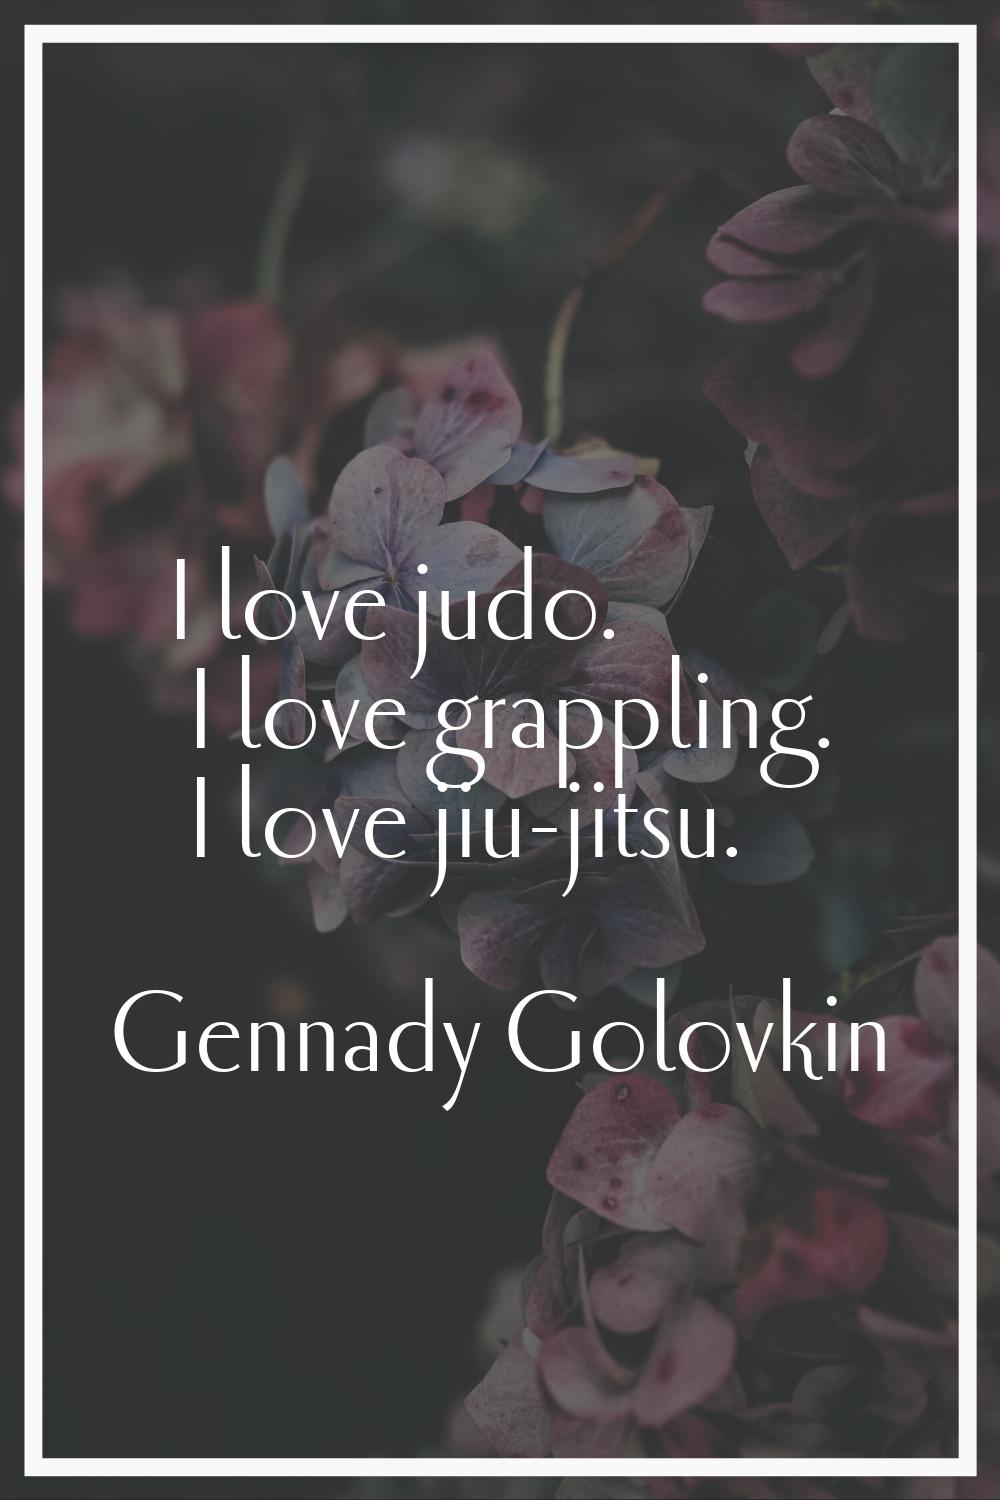 I love judo. I love grappling. I love jiu-jitsu.